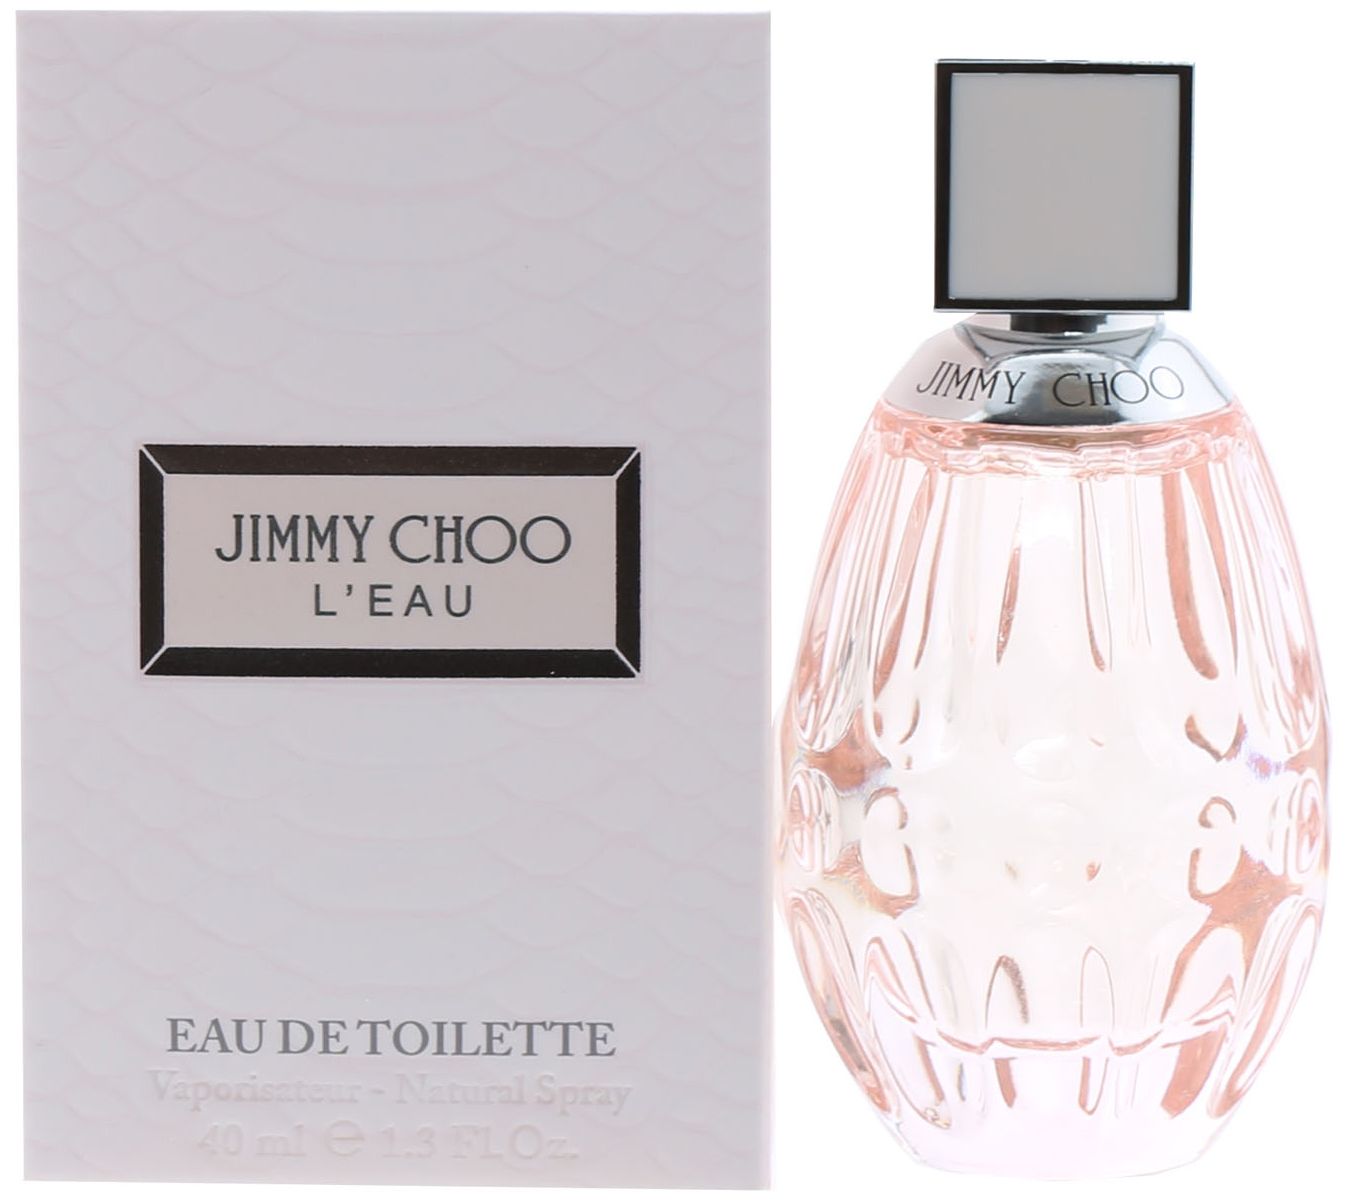 Jimmy Choo by Jimmy Choo, Eau de Parfum Spray (women) 1.3 oz